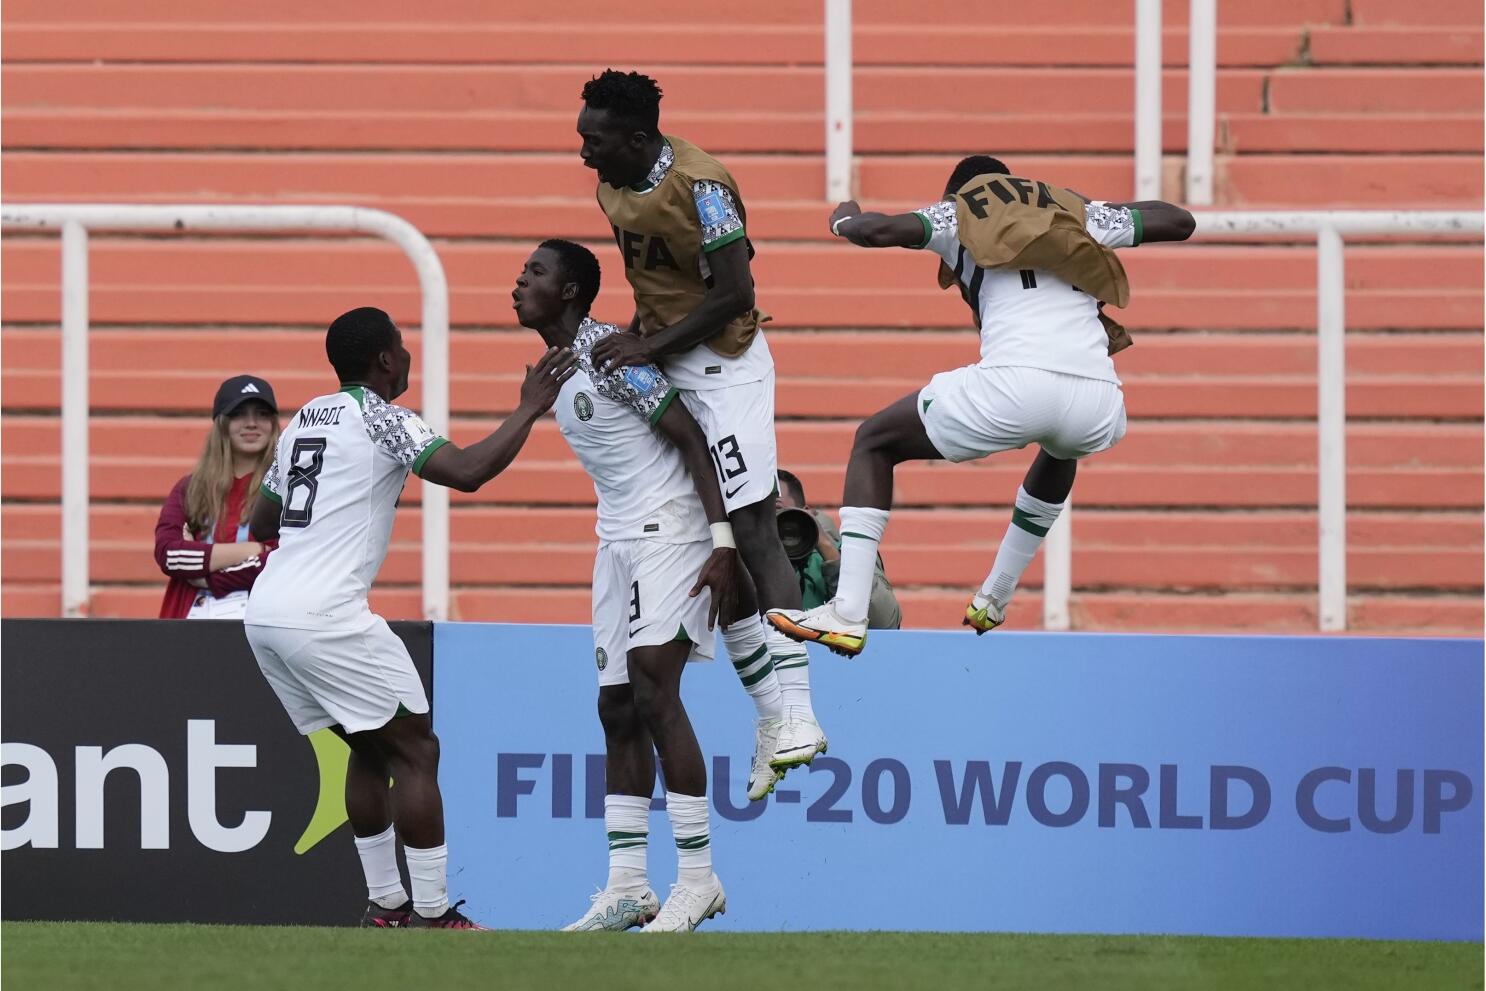 U20 World Cup: Italy drawn alongside Brazil, Nigeria and the